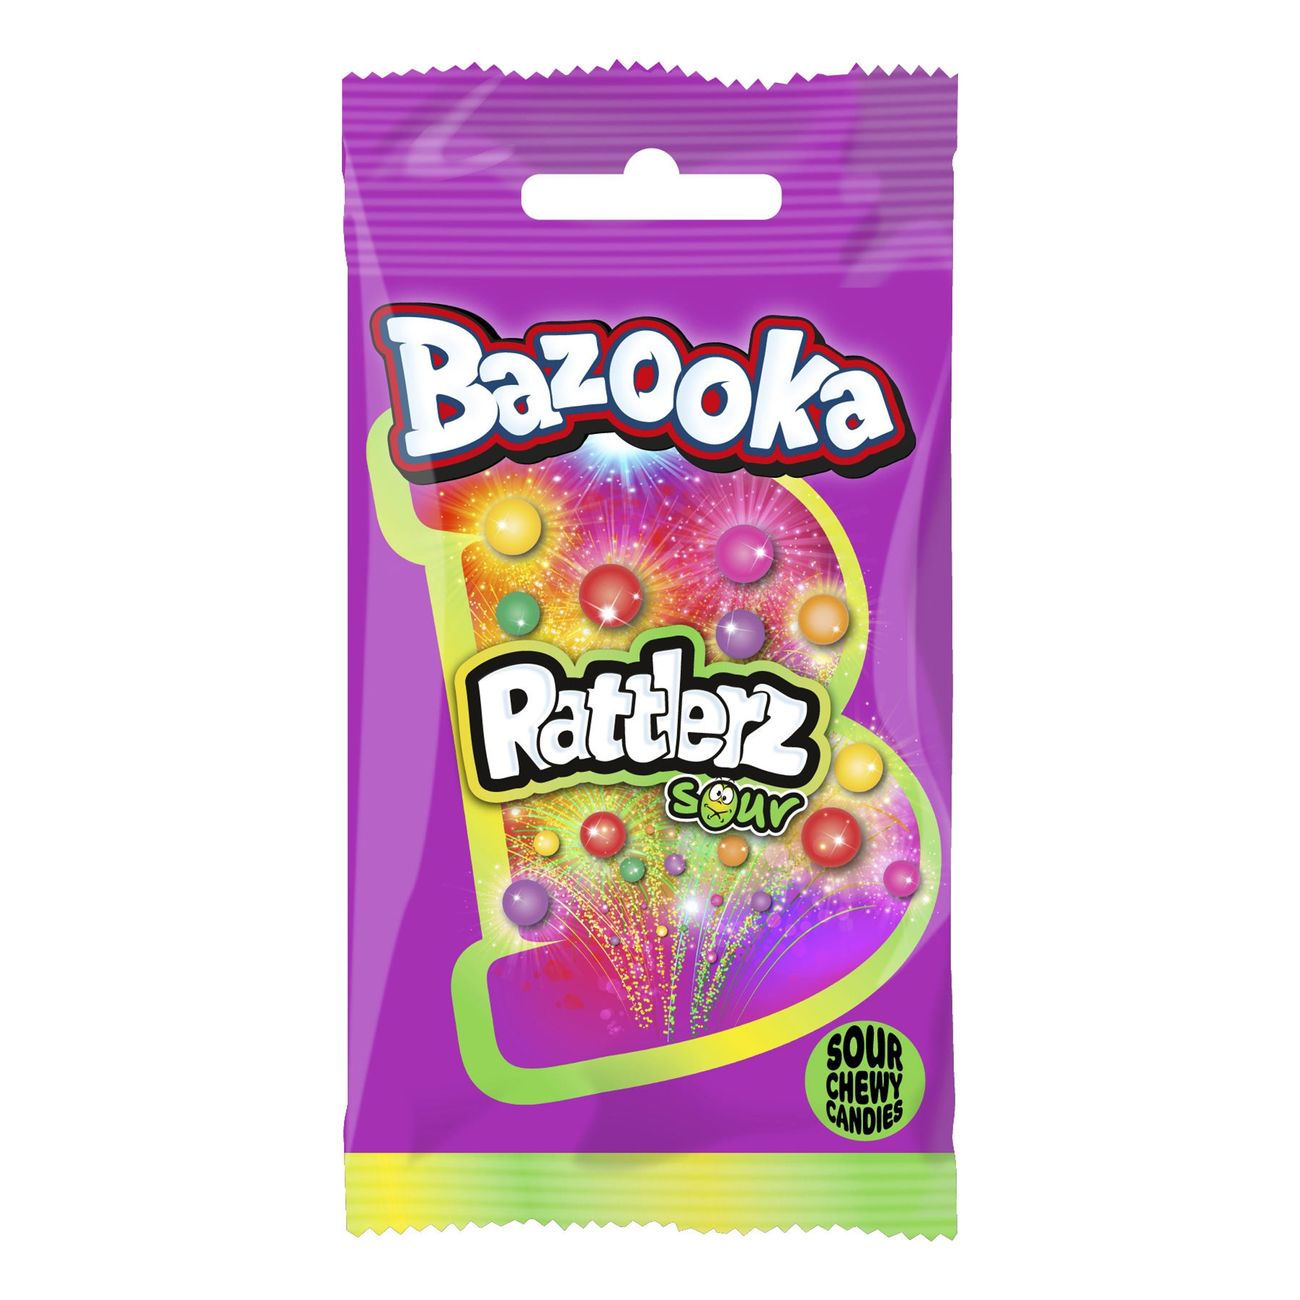 bazooka-rattlerz-sour-89020-1